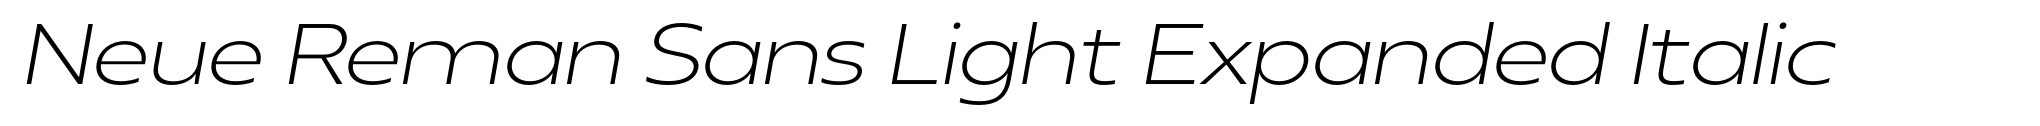 Neue Reman Sans Light Expanded Italic image